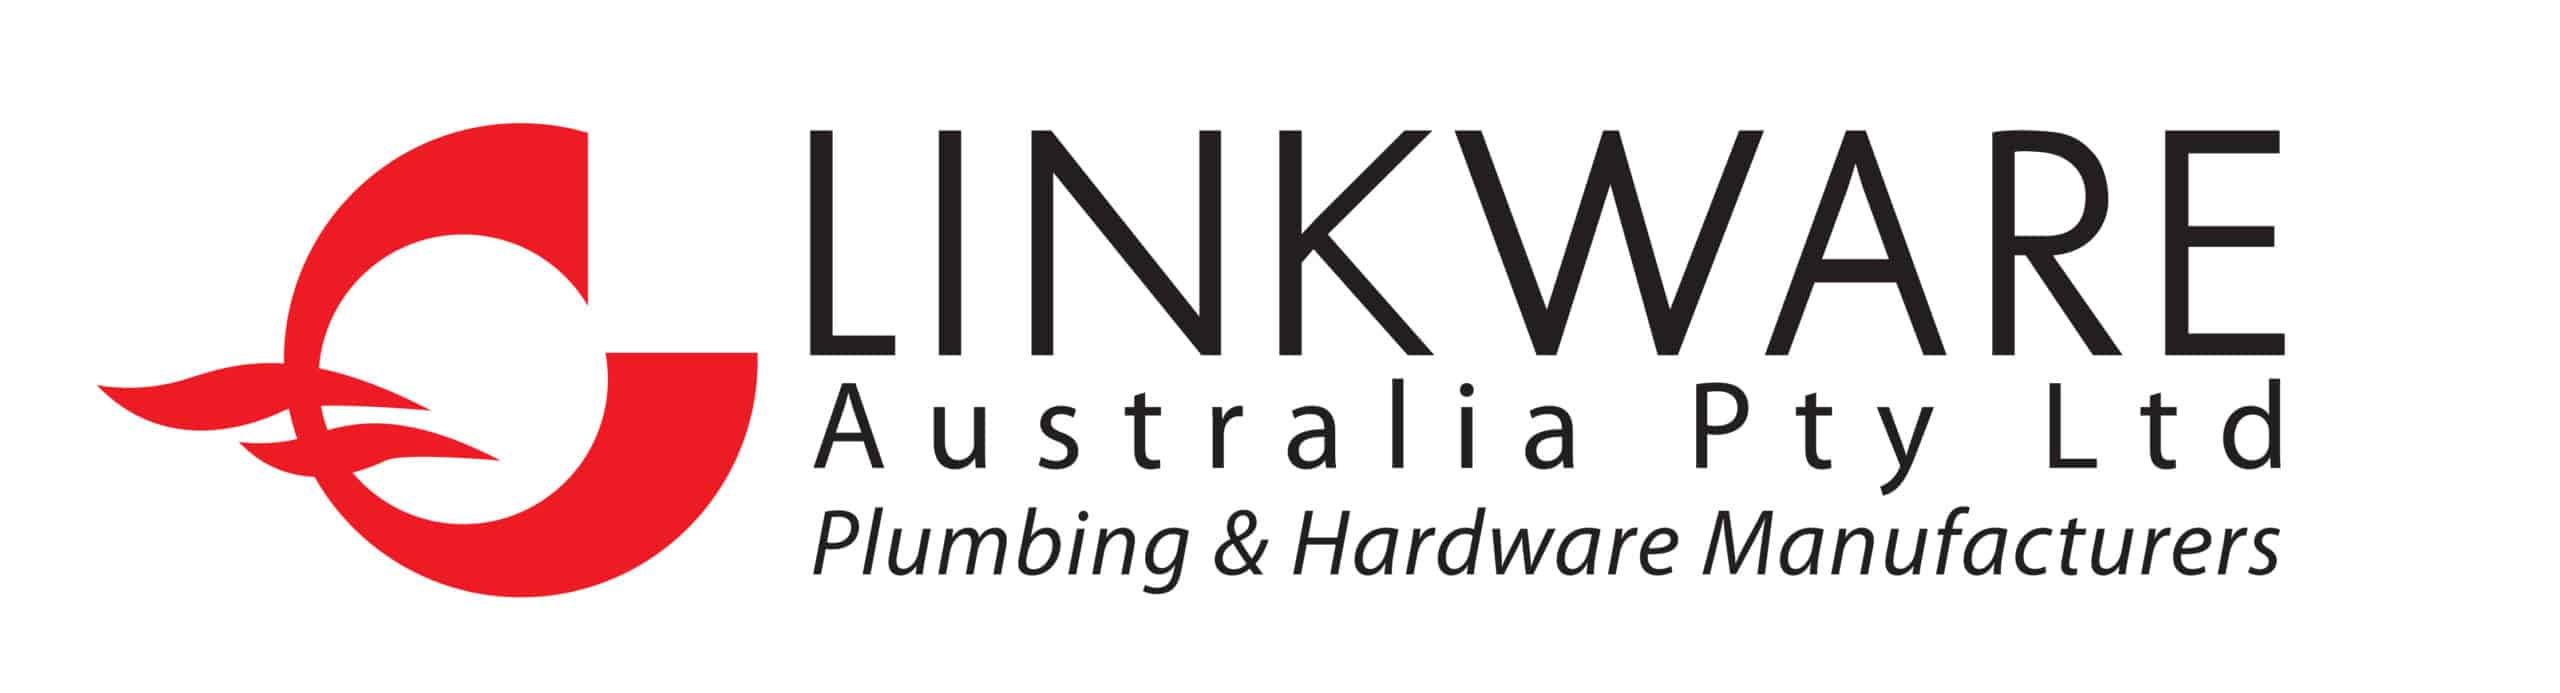 Linkware Australia Sydney